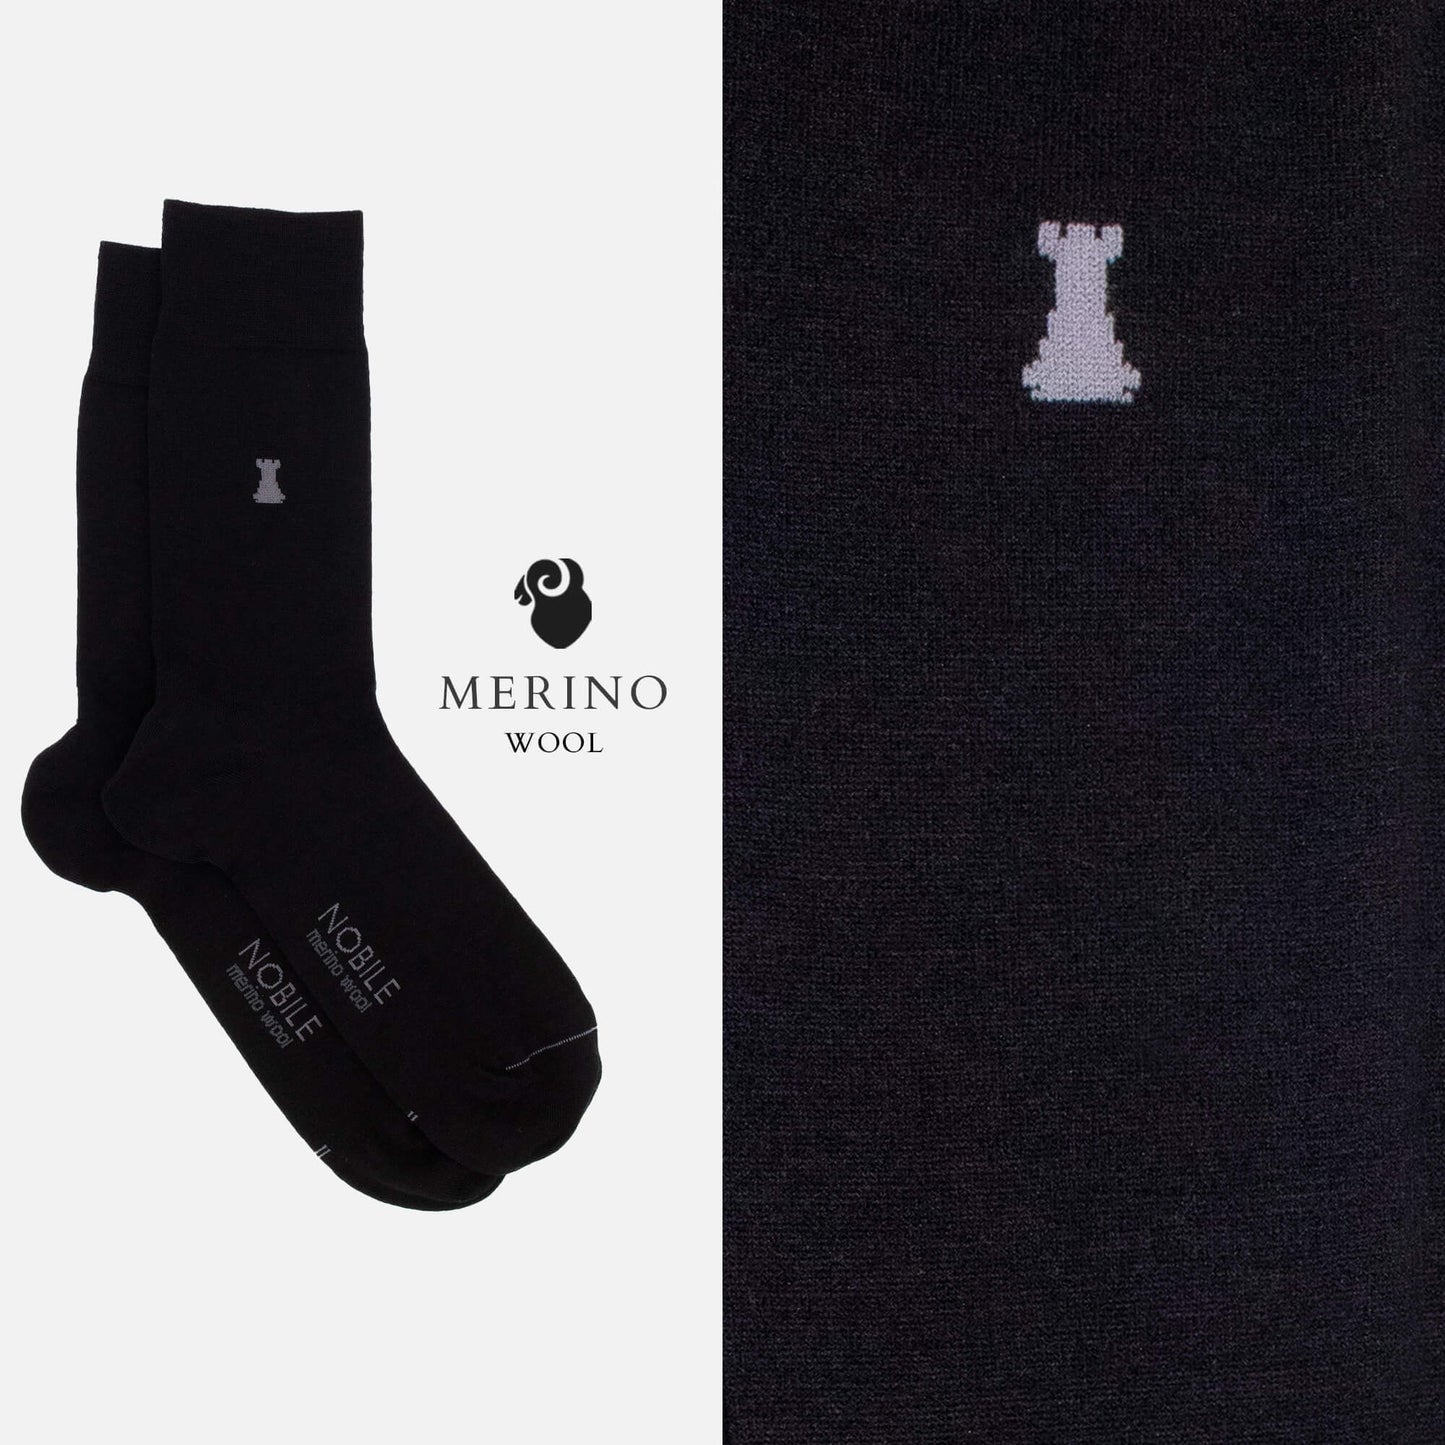 Merino Basic - Box of 6 crew socks in plain color Merino wool